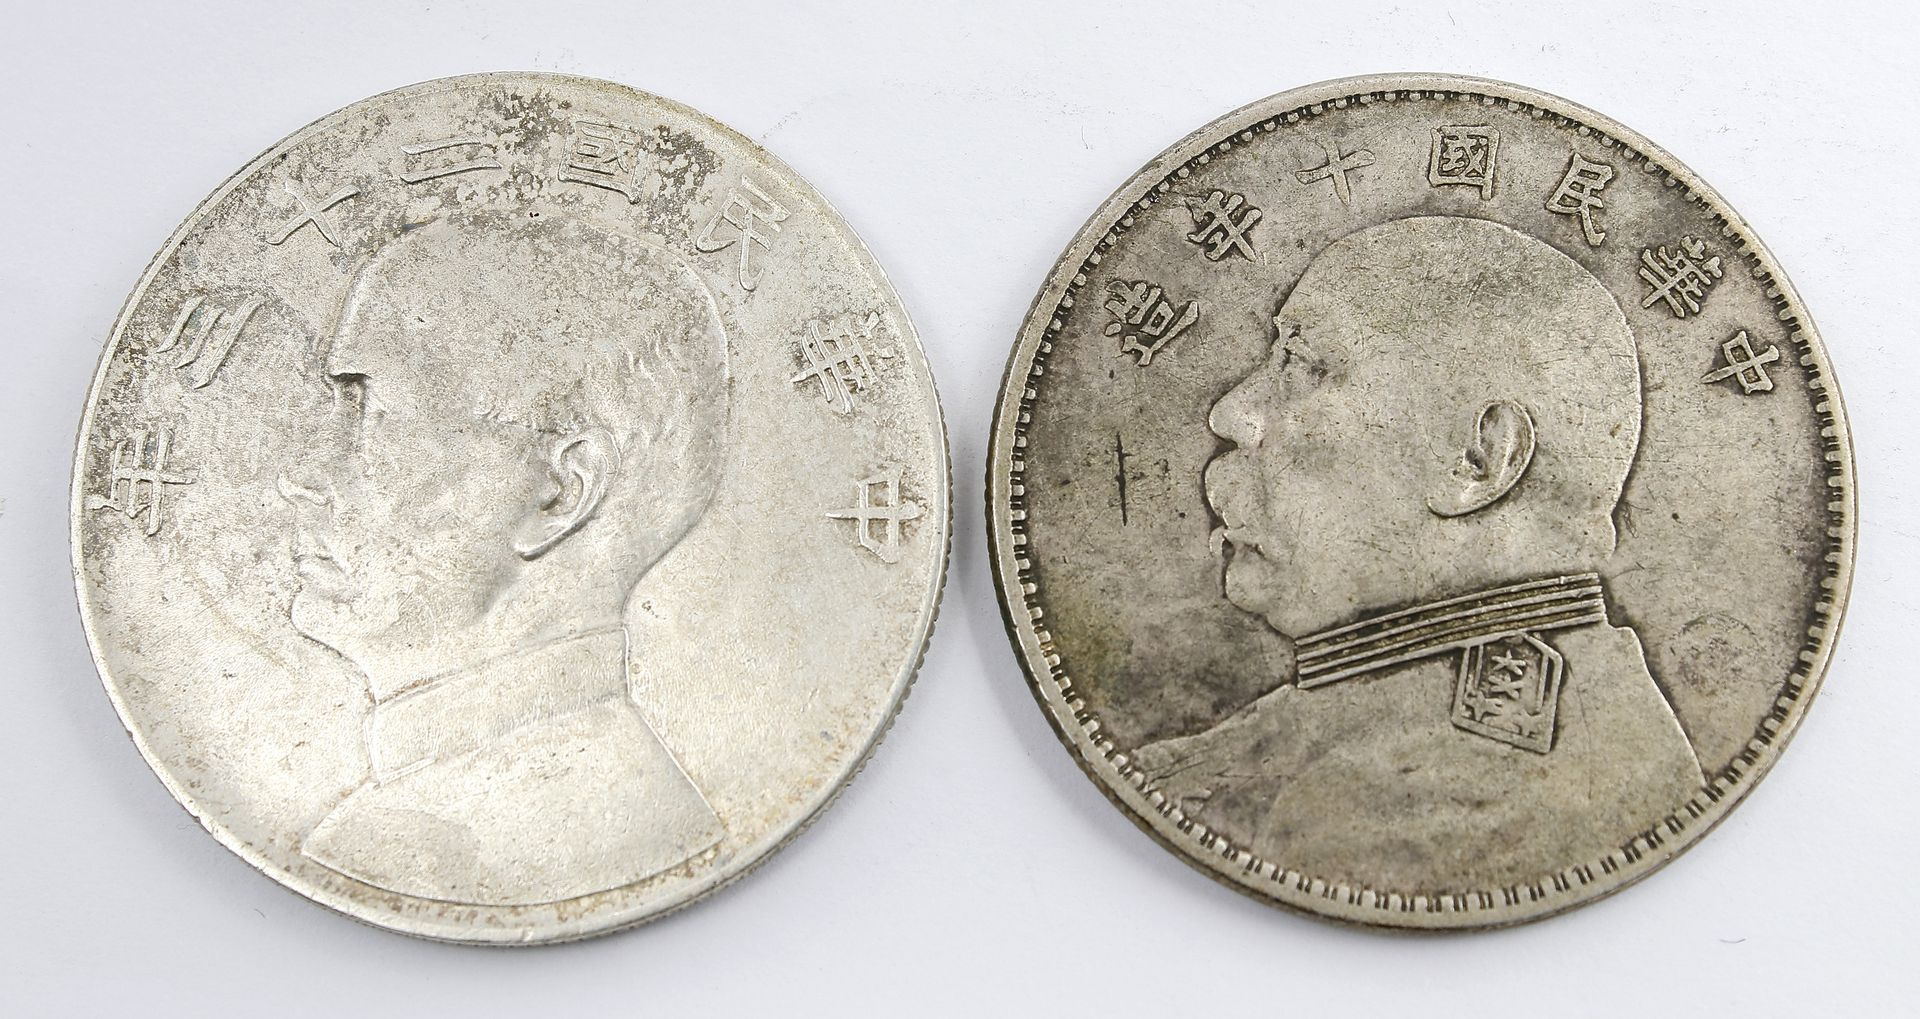 China, Republik, zweimal ein Dollar: - Image 2 of 2